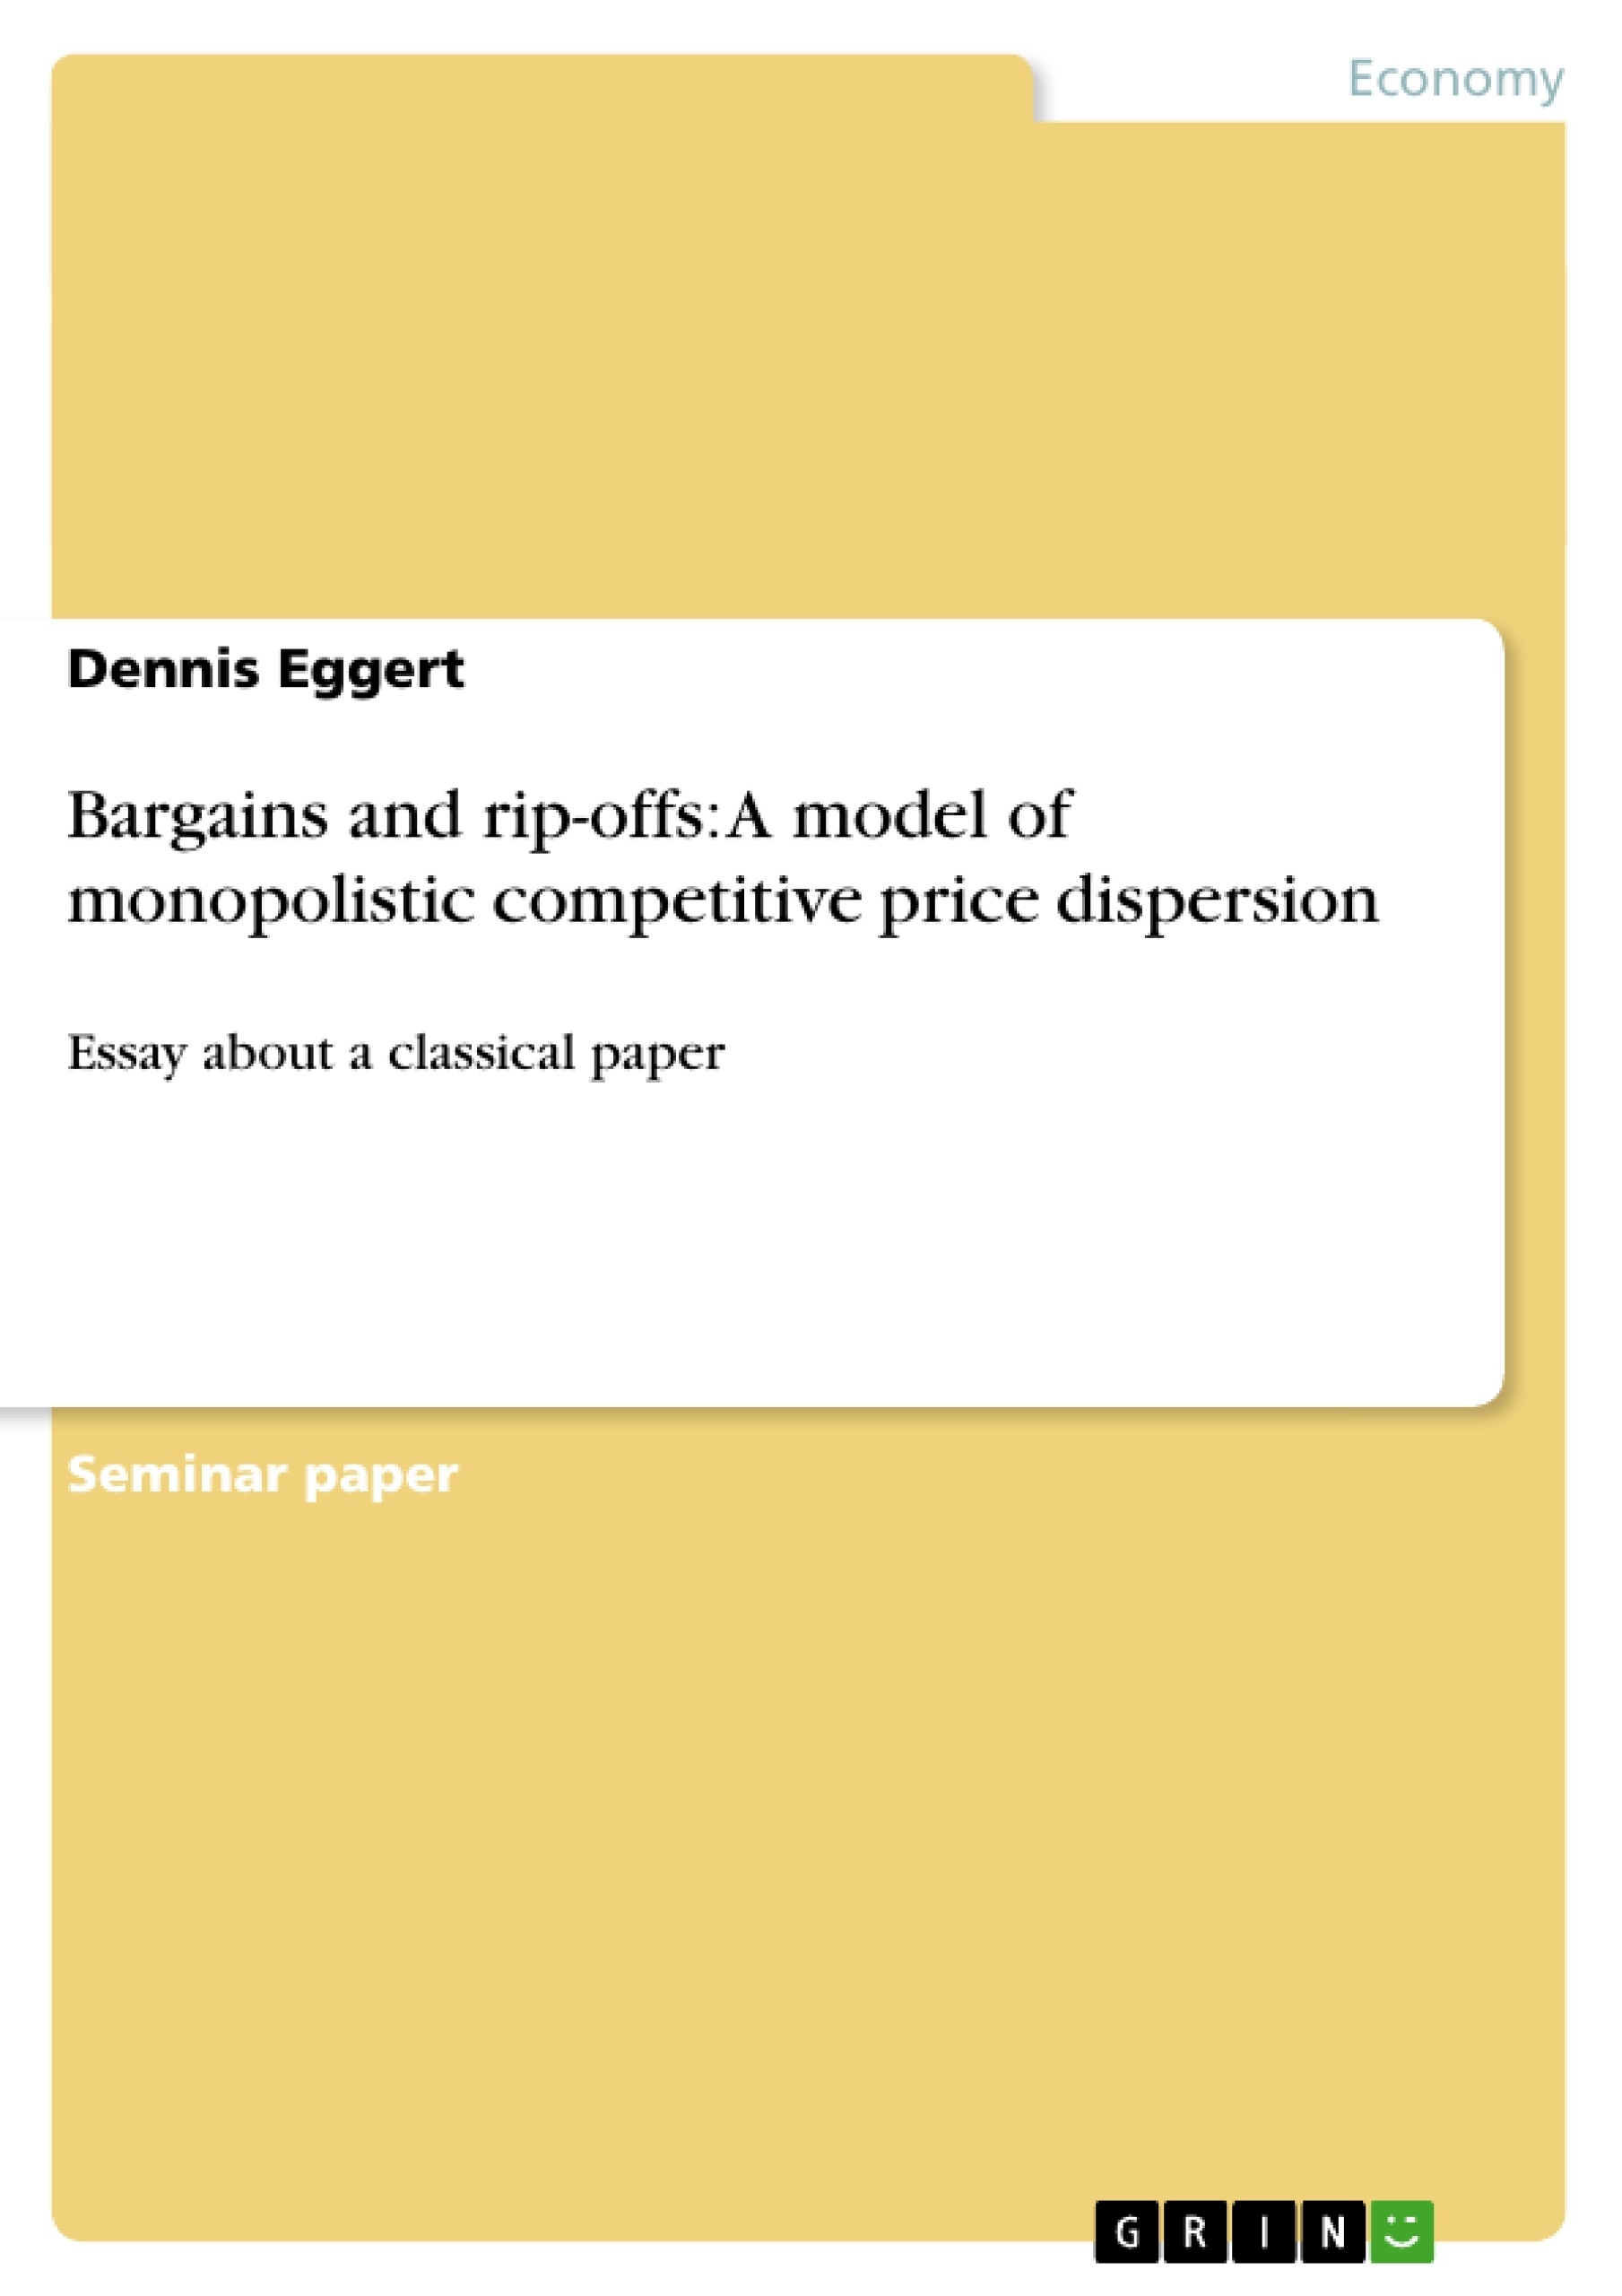 monopolistic competition essay